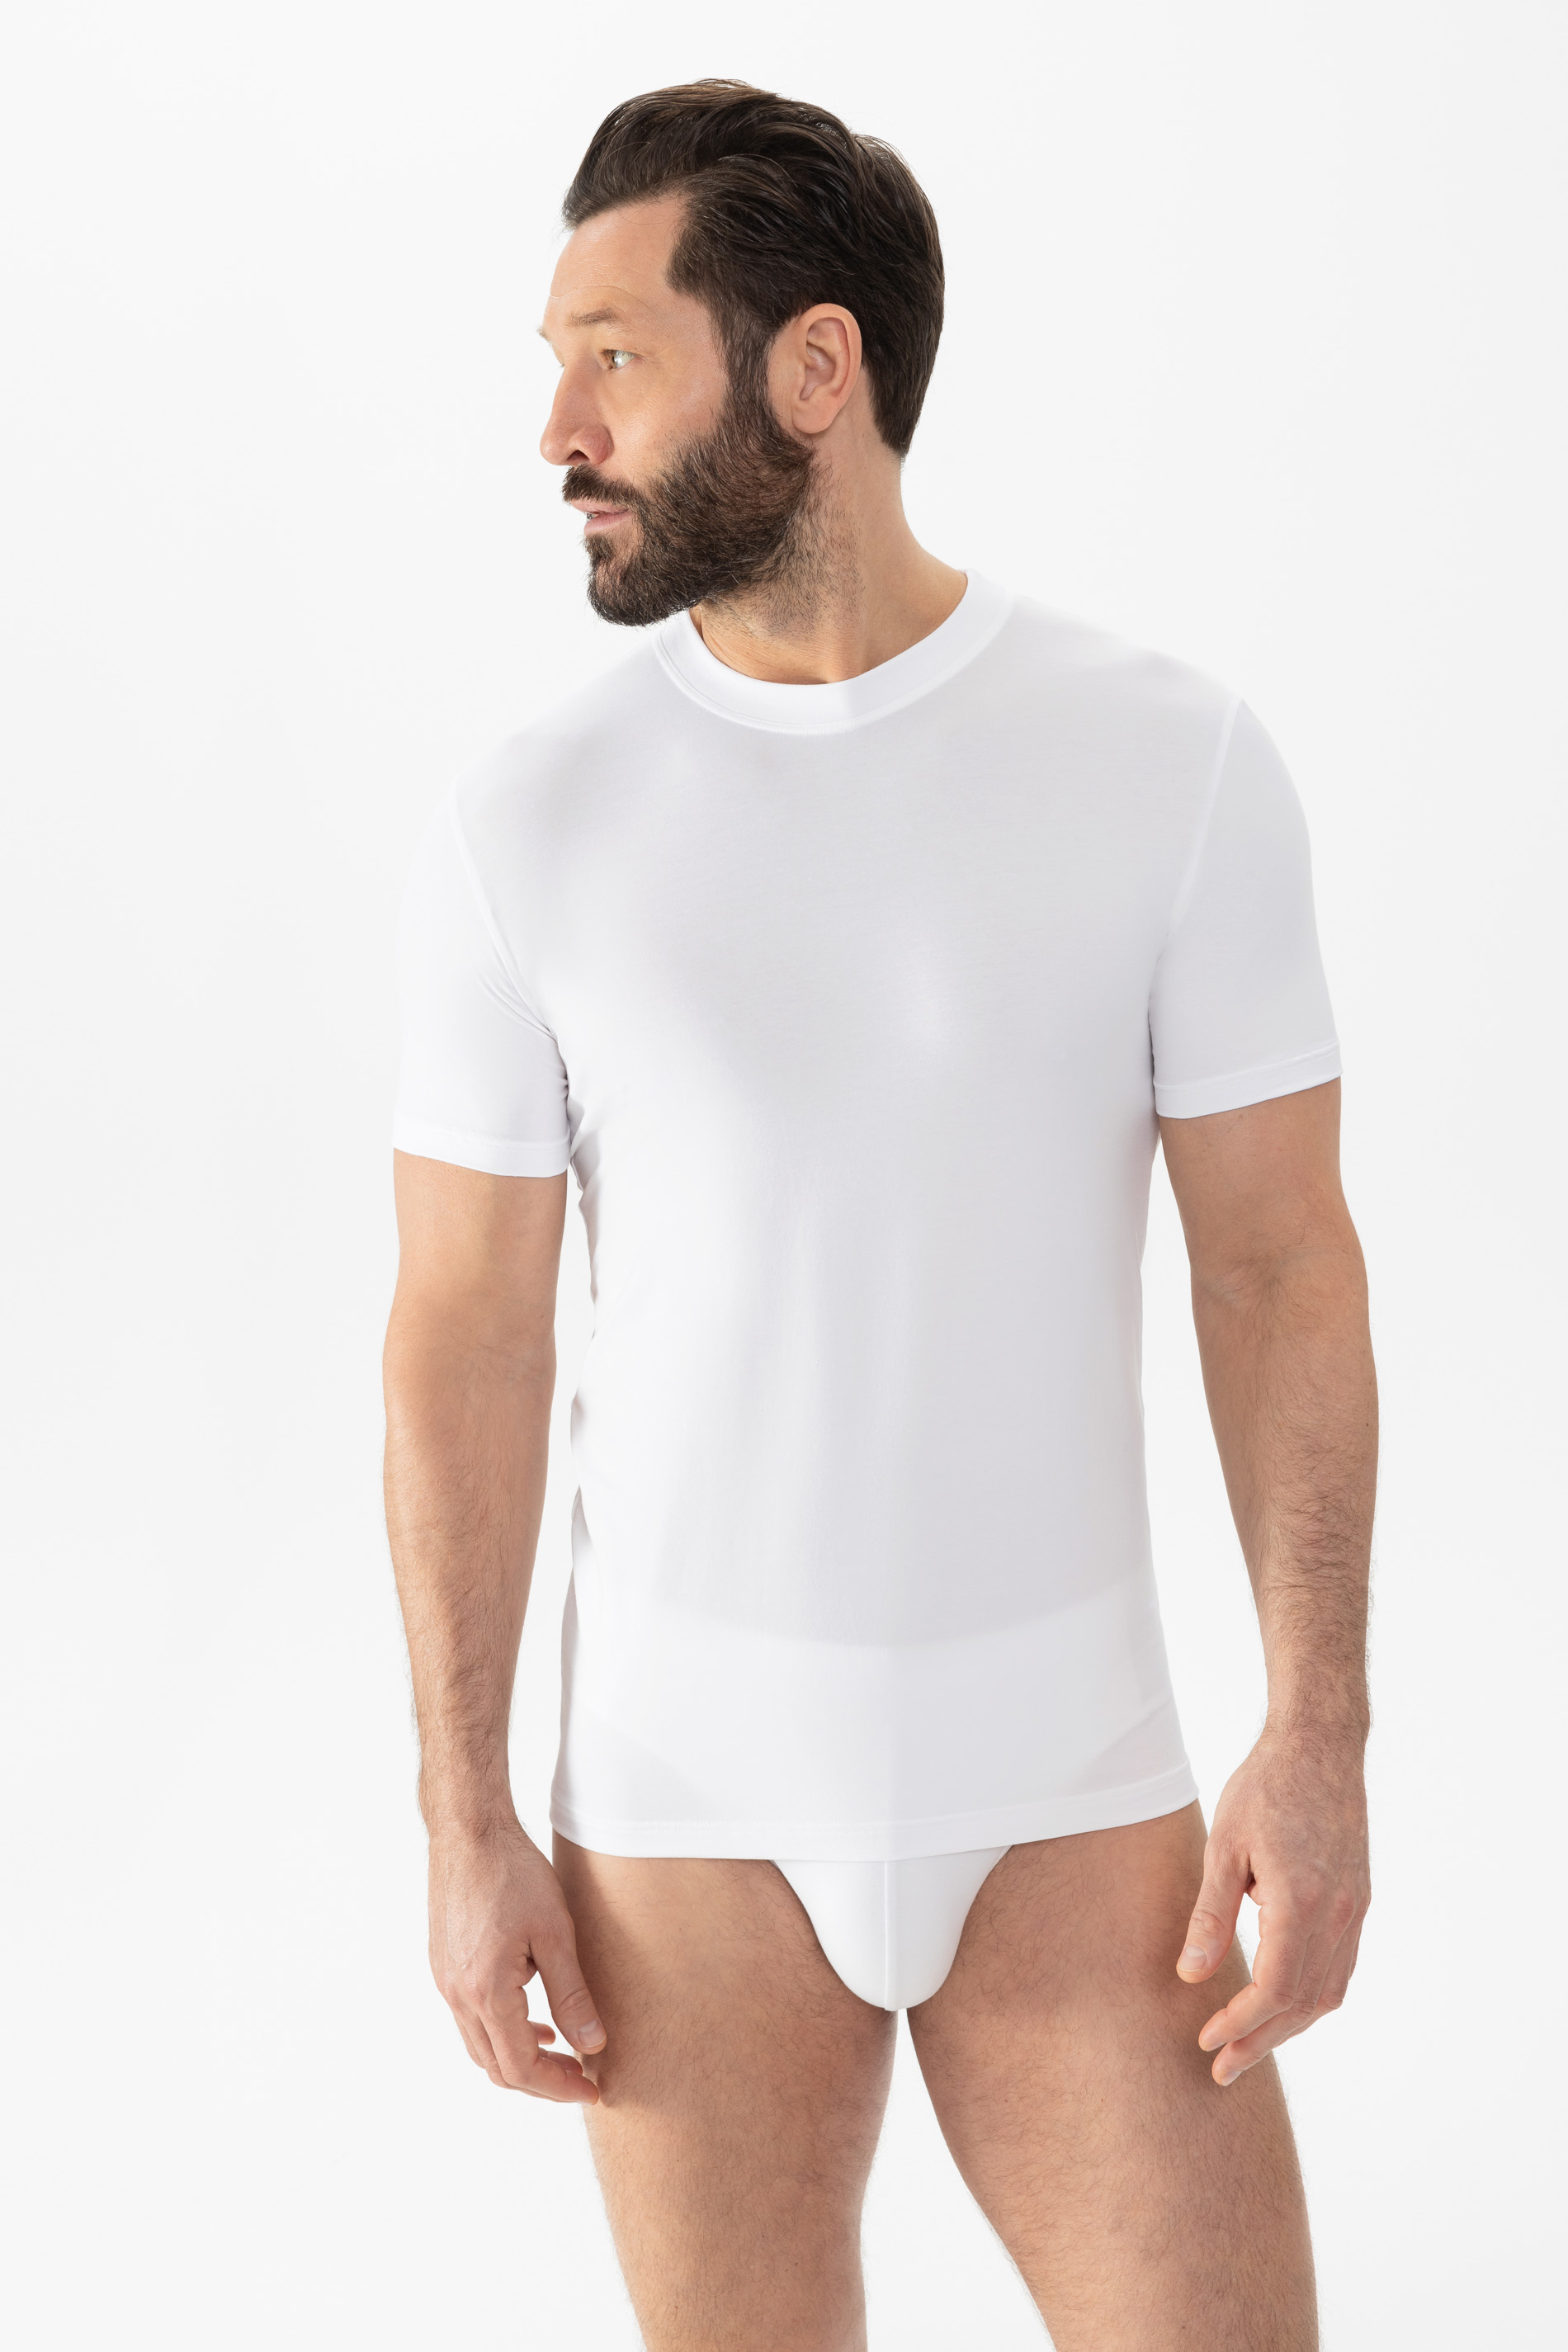 Shirt Weiss Serie Dry Cotton Frontansicht | mey®